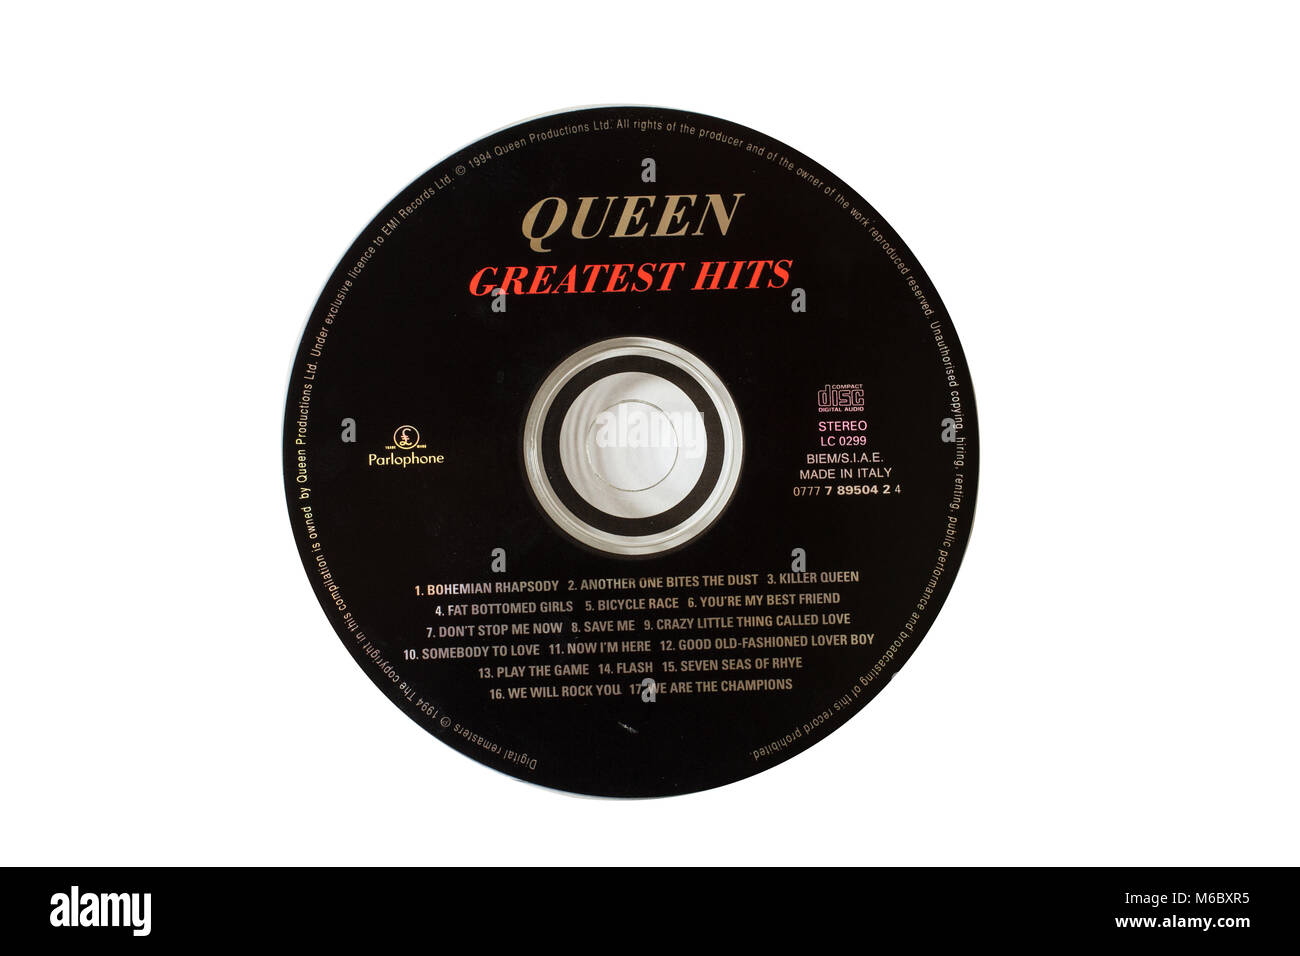 Queen Greatest Hits original album Stock Photo - Alamy